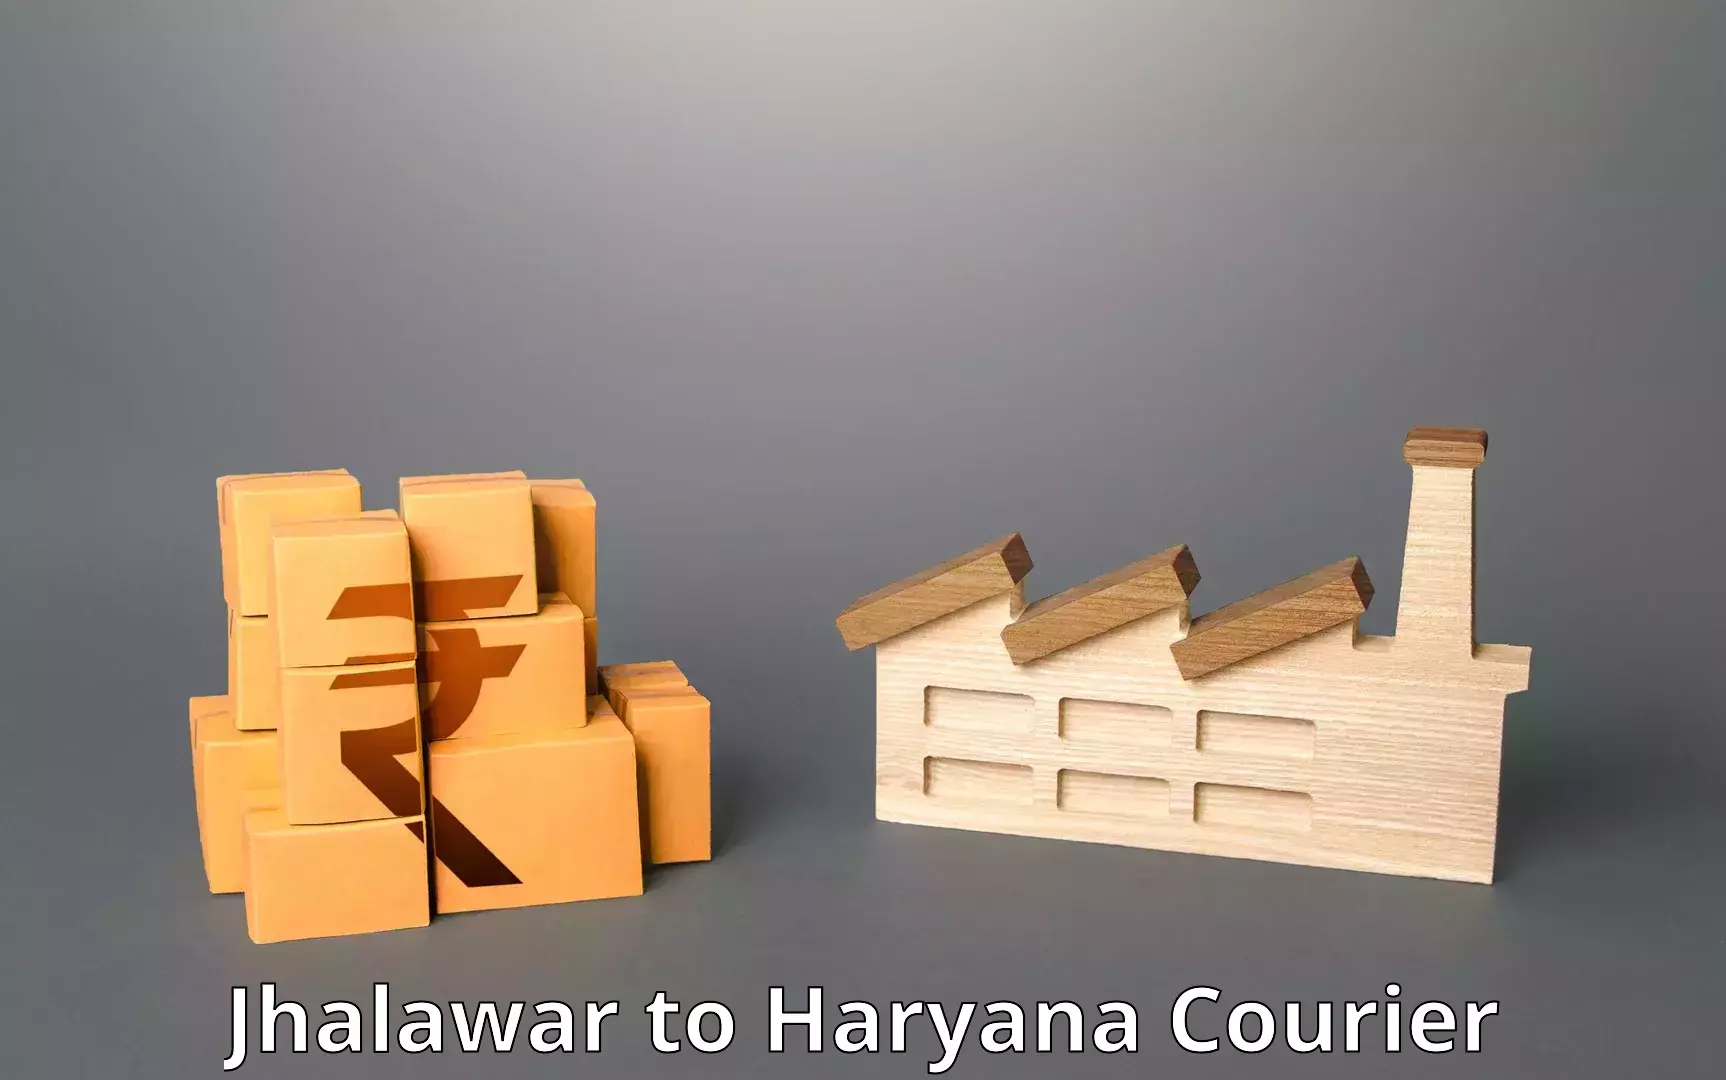 Courier service efficiency Jhalawar to Karnal